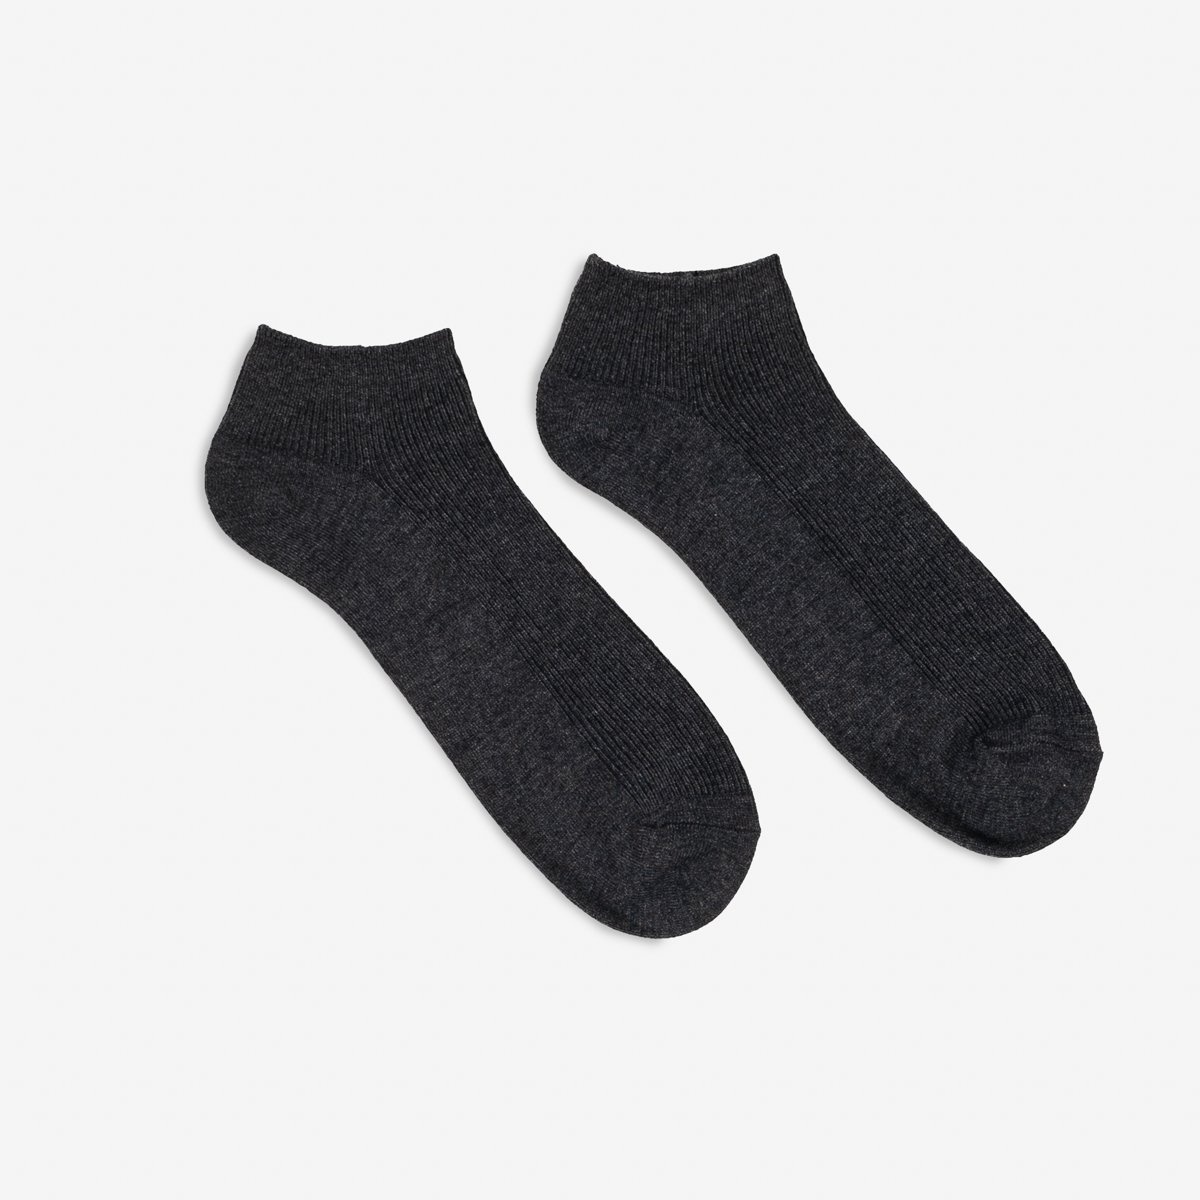 UTSS-CGR UTILITEES Mixed Cotton Sneaker Socks - Charcoal Grey - 1